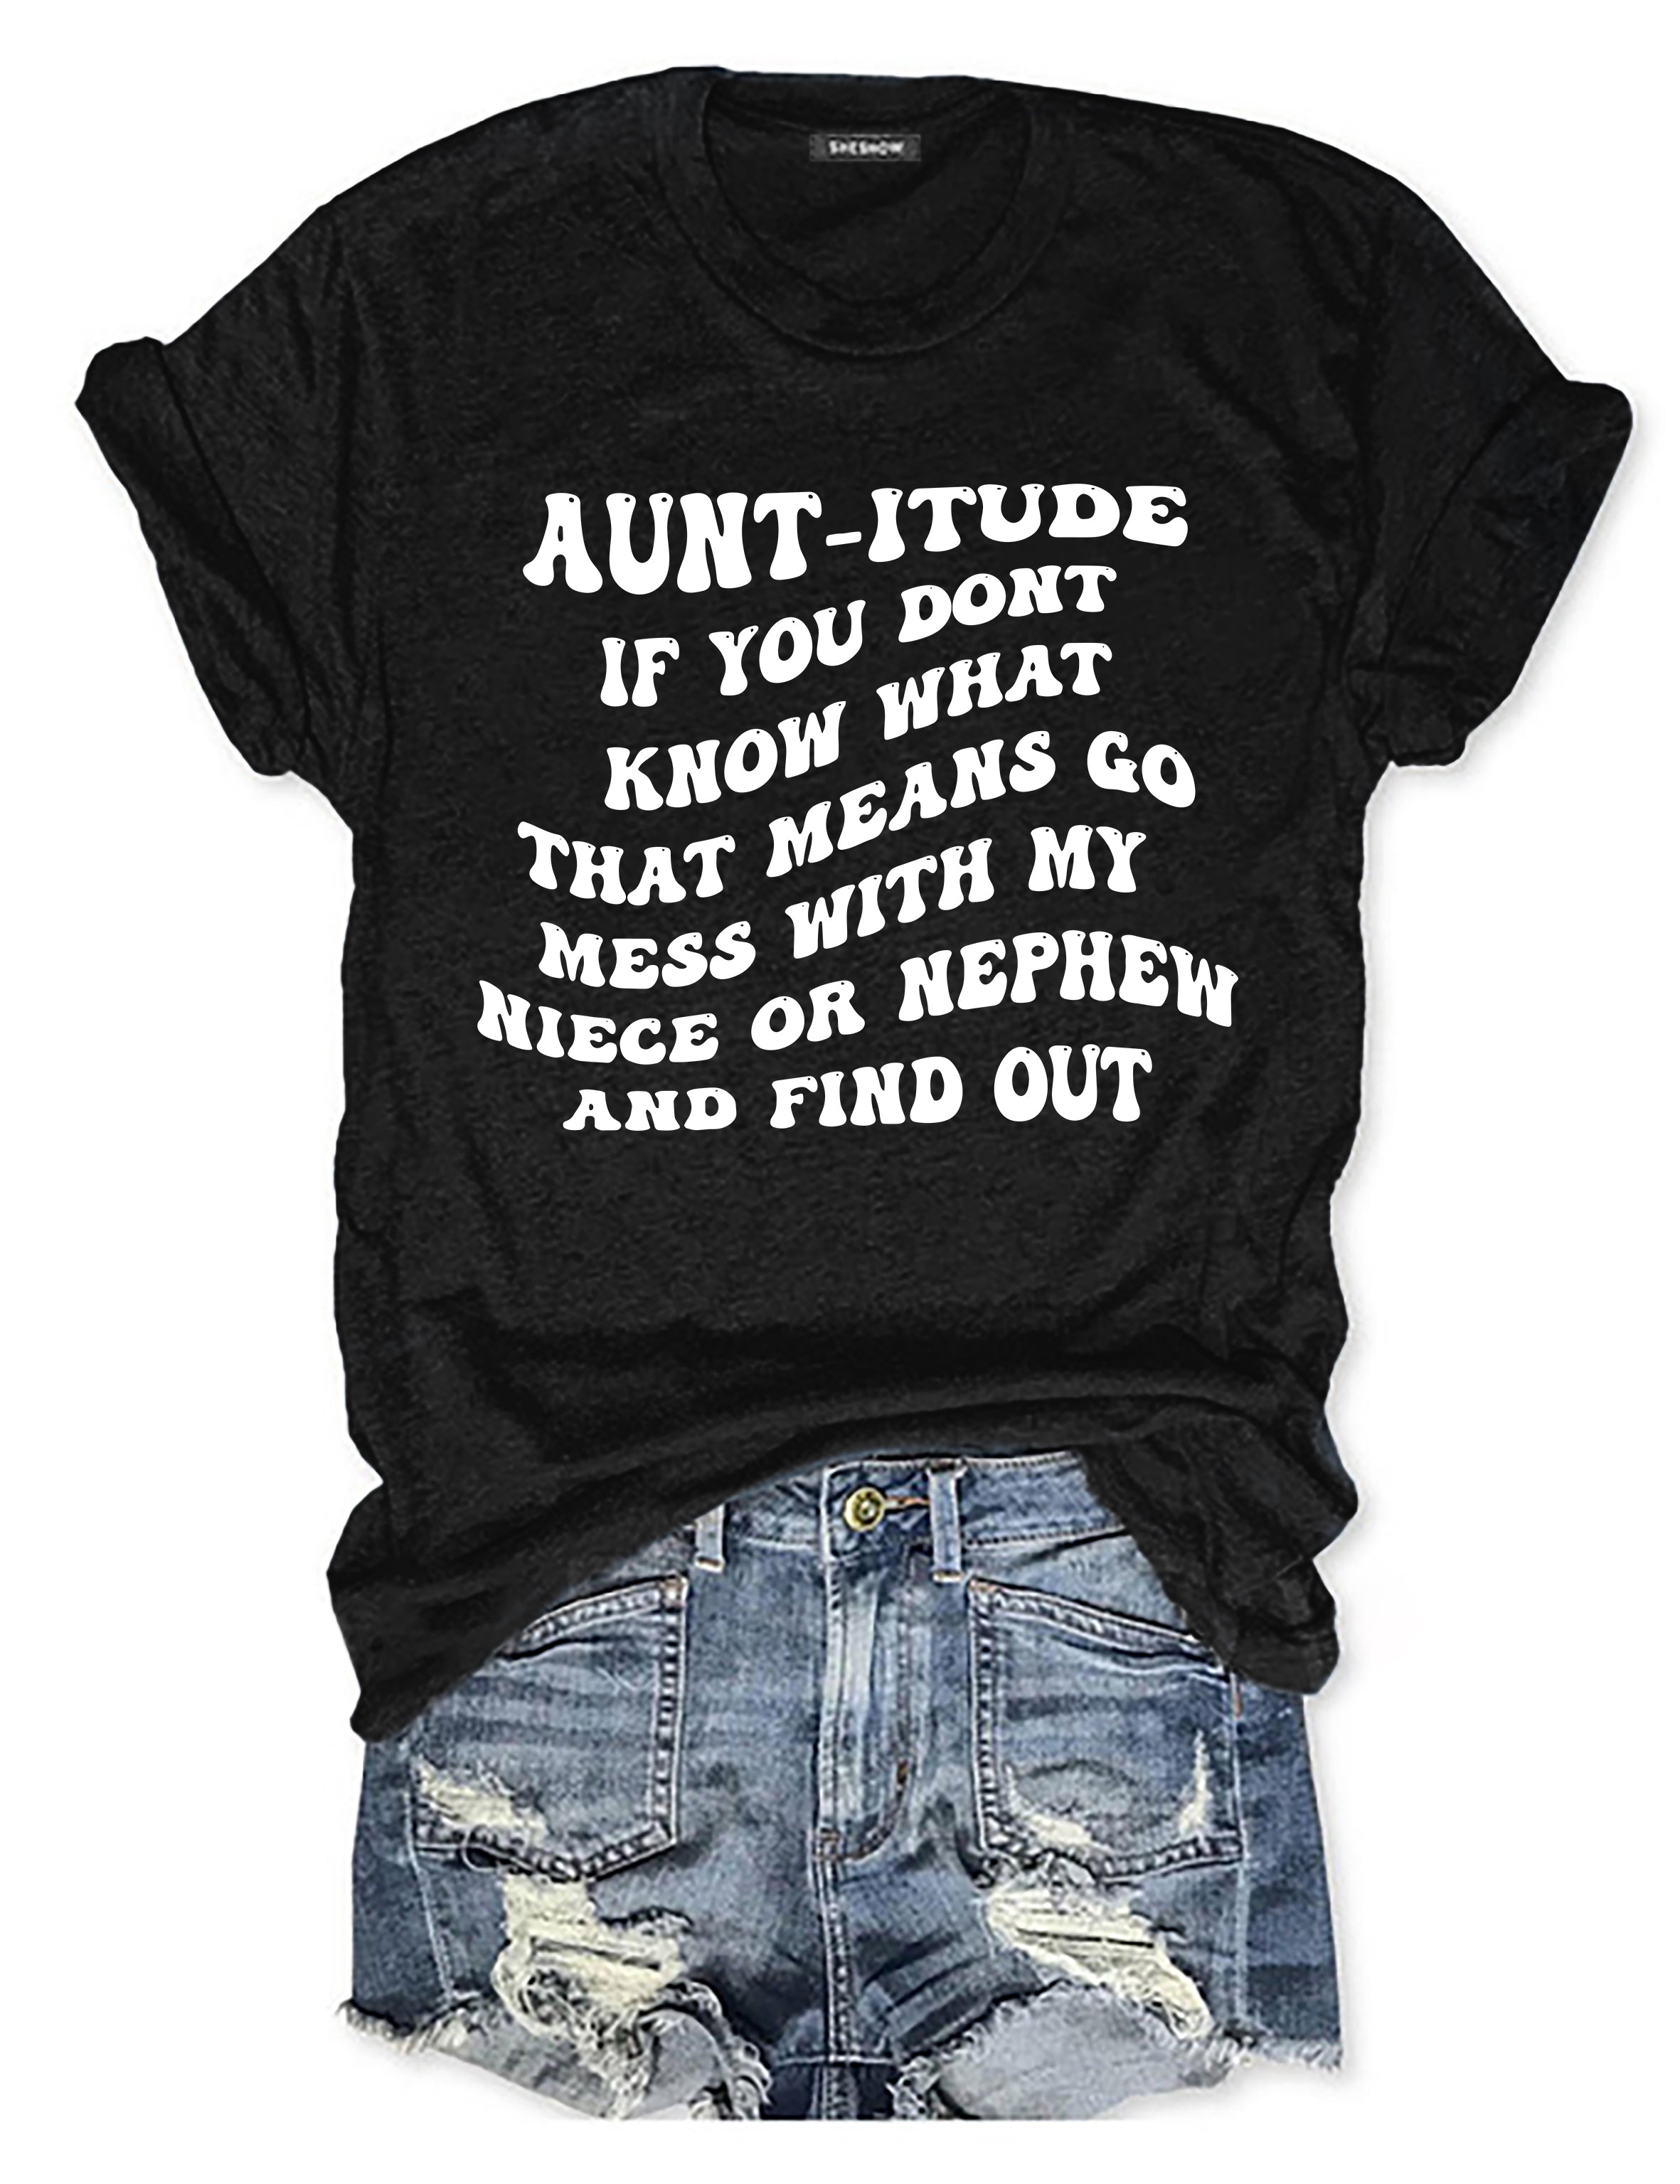 Aunt-itude T-shirt